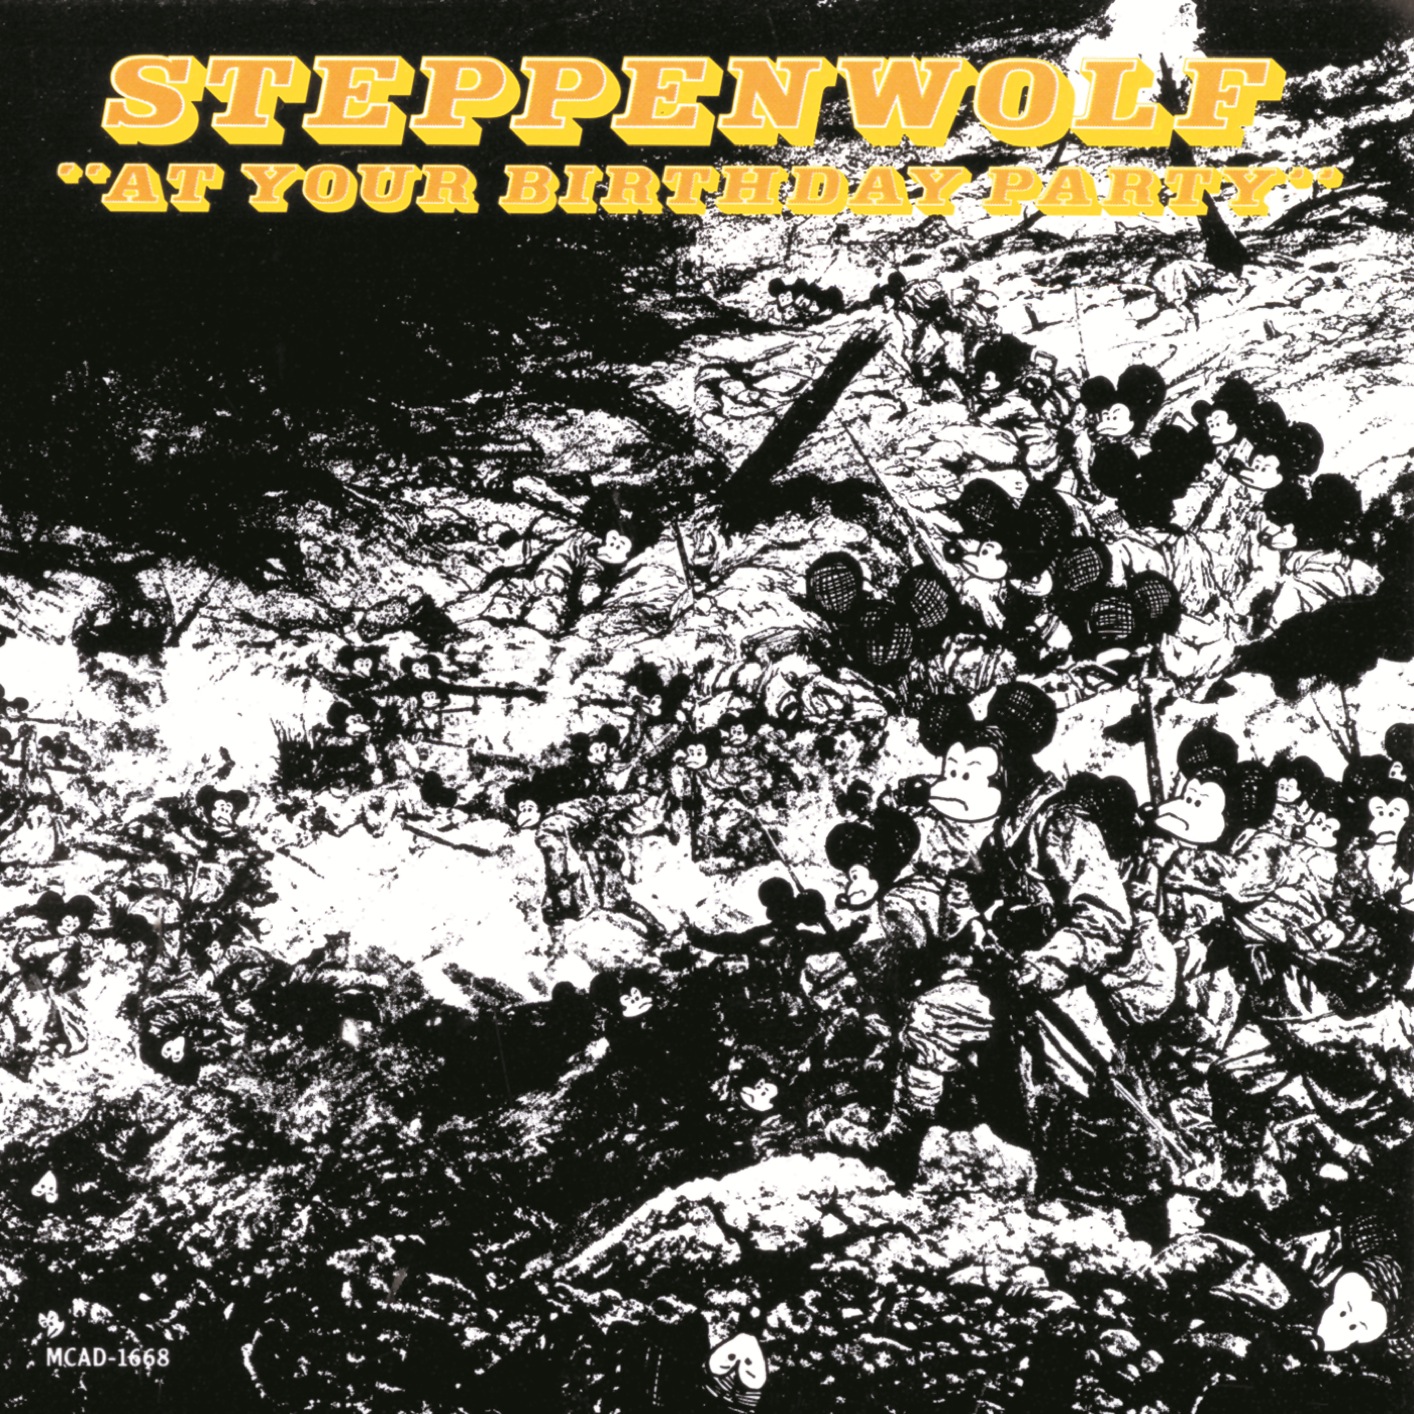 Steppenwolf 'Born to Be Wild' lyrics autographed by John Kay